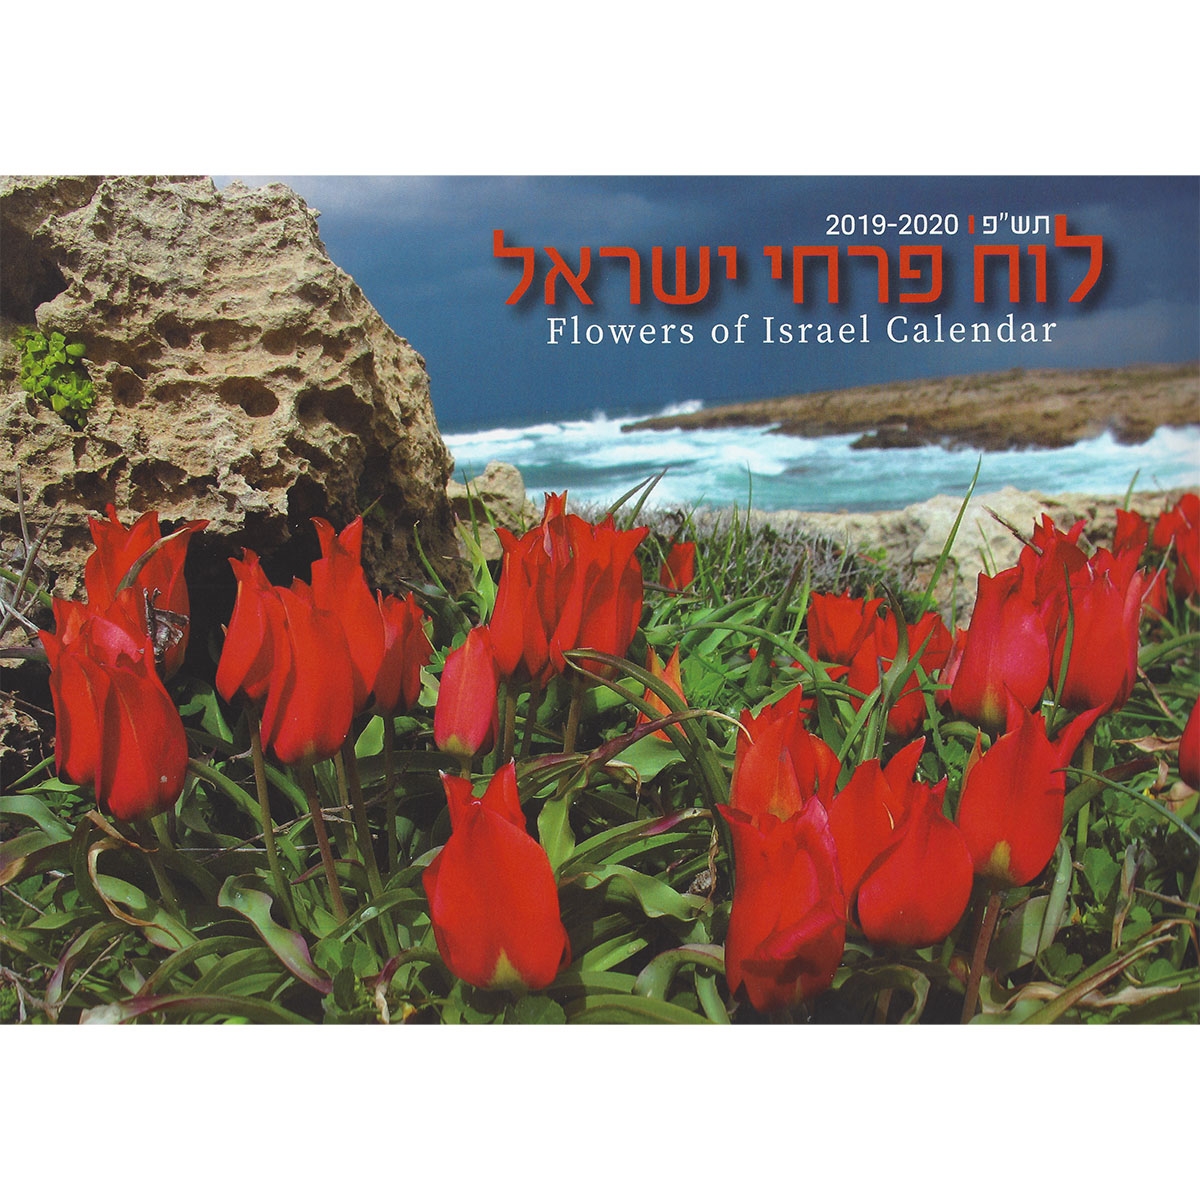 Full-Size Flowers of Israel Wall Calendar 2019-20 - 1